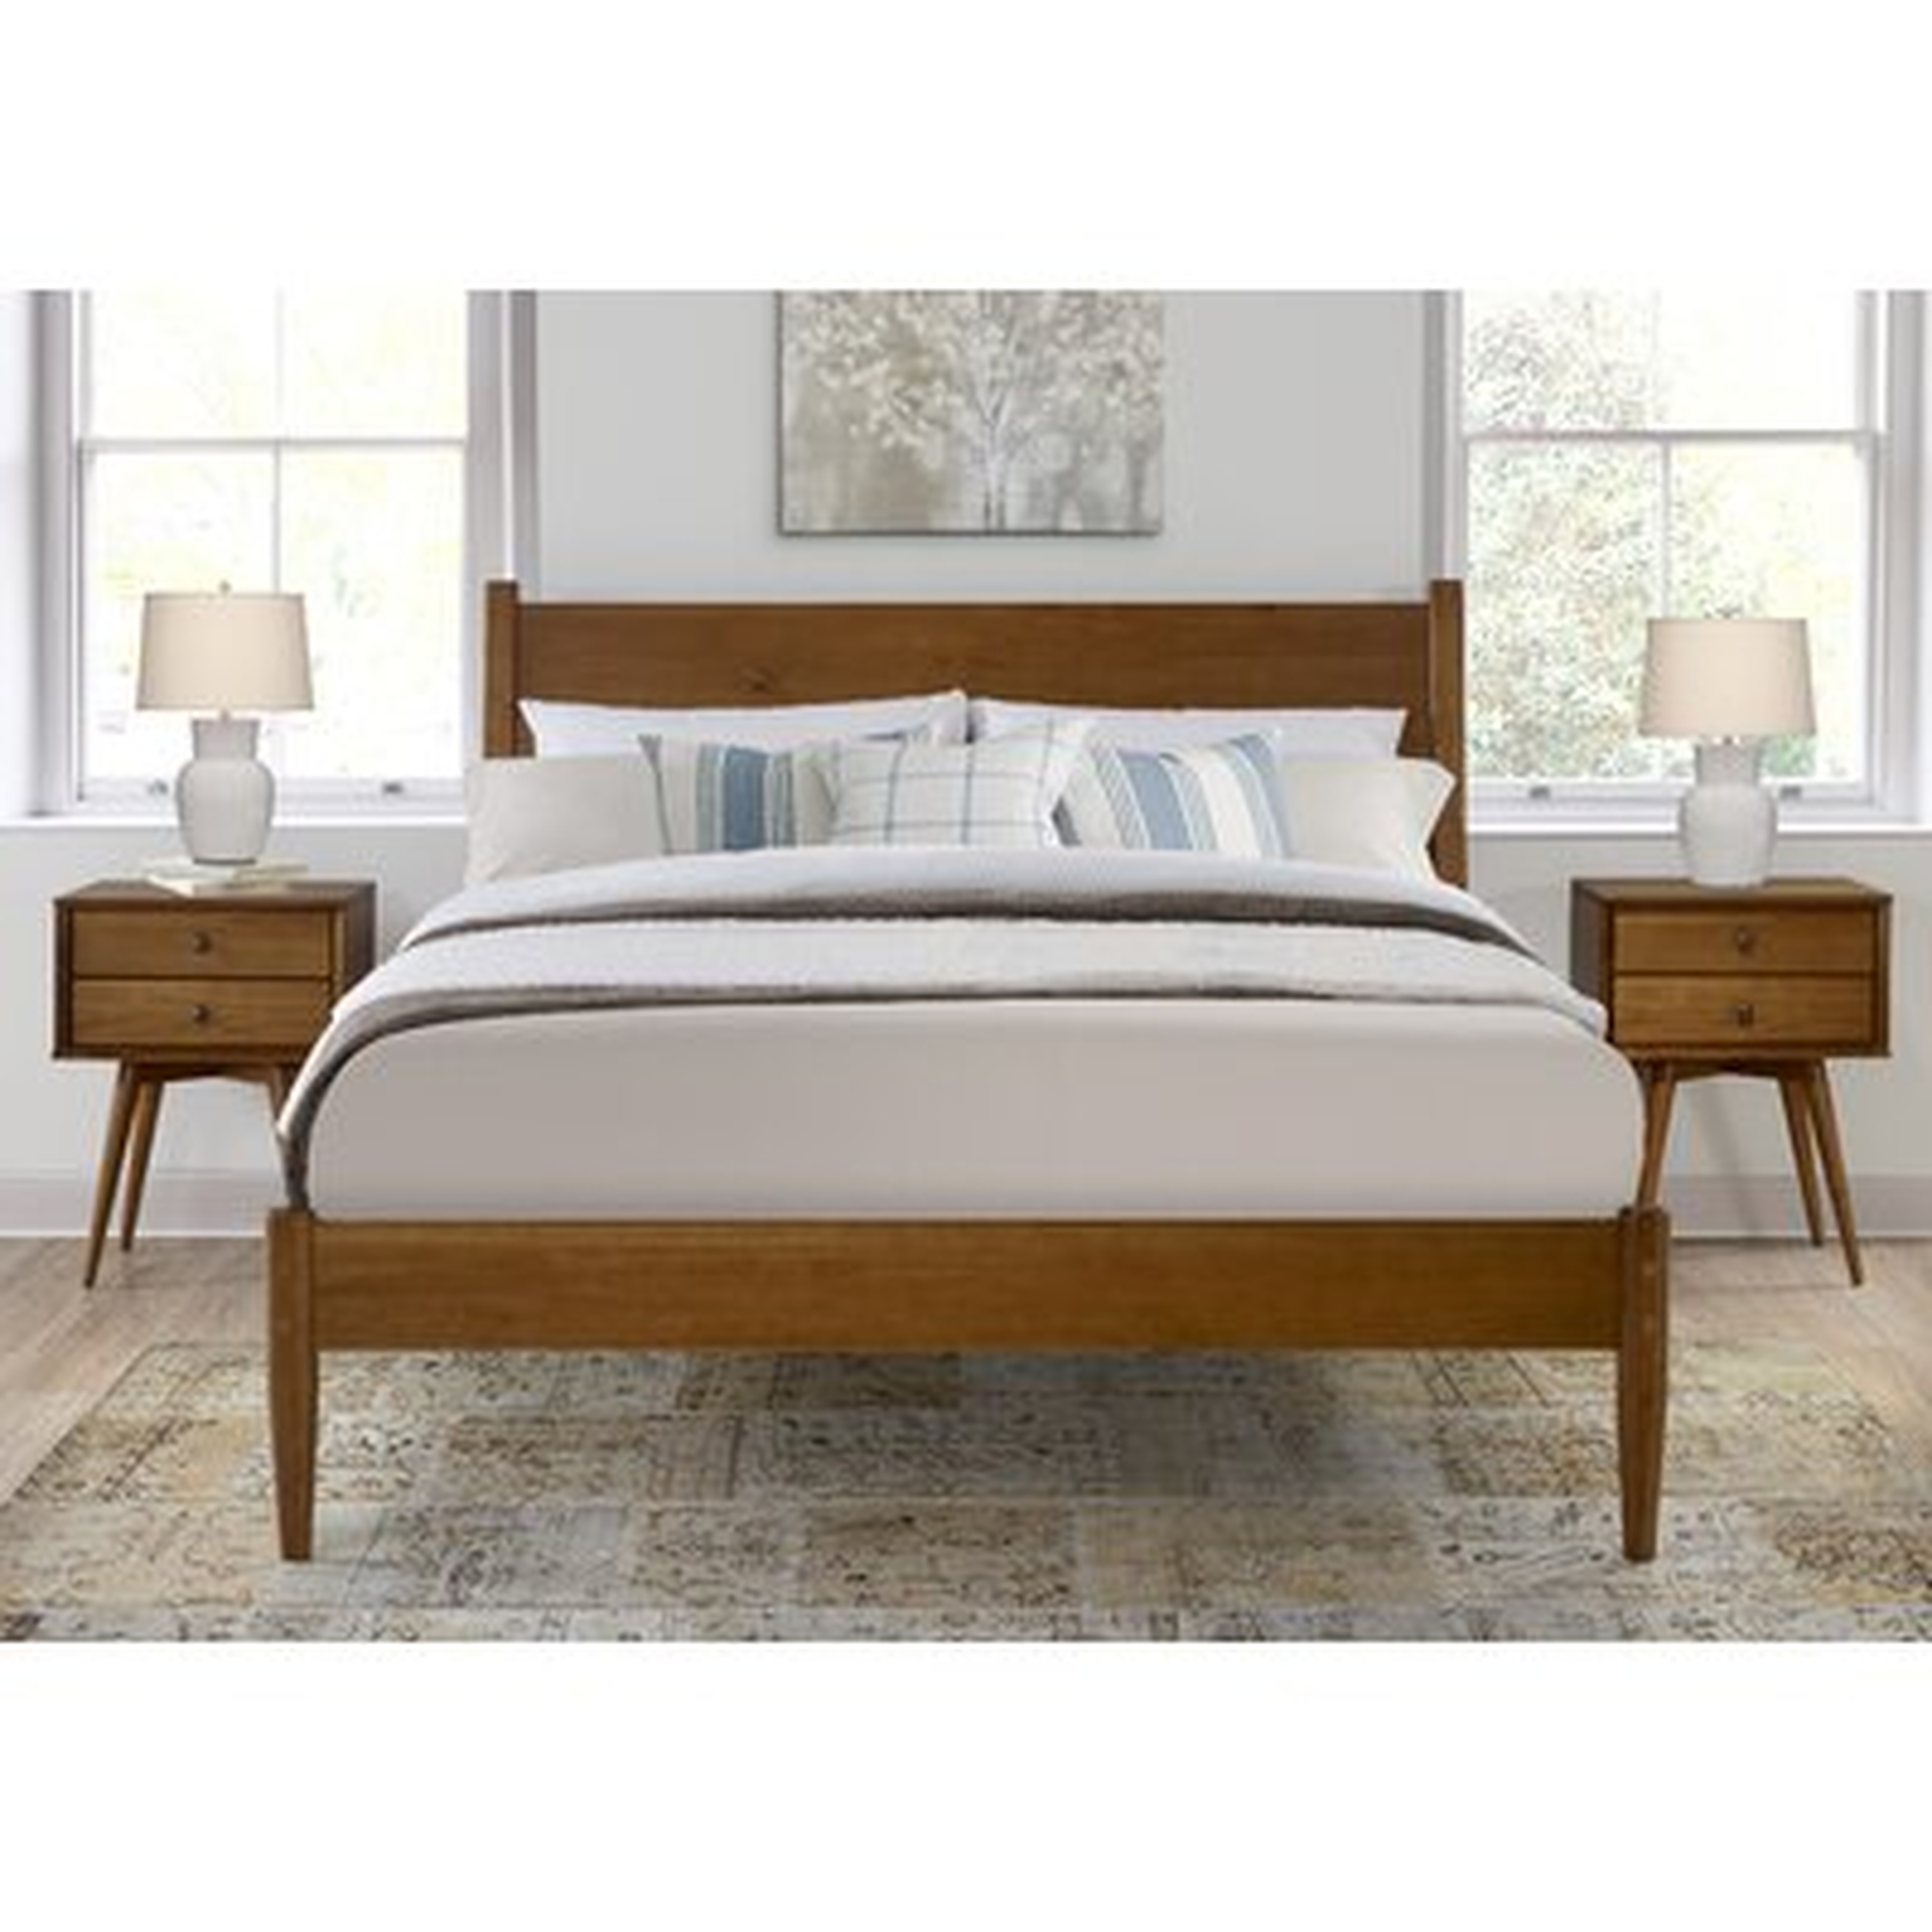 Grady King Solid Wood Platform Bed - Wayfair